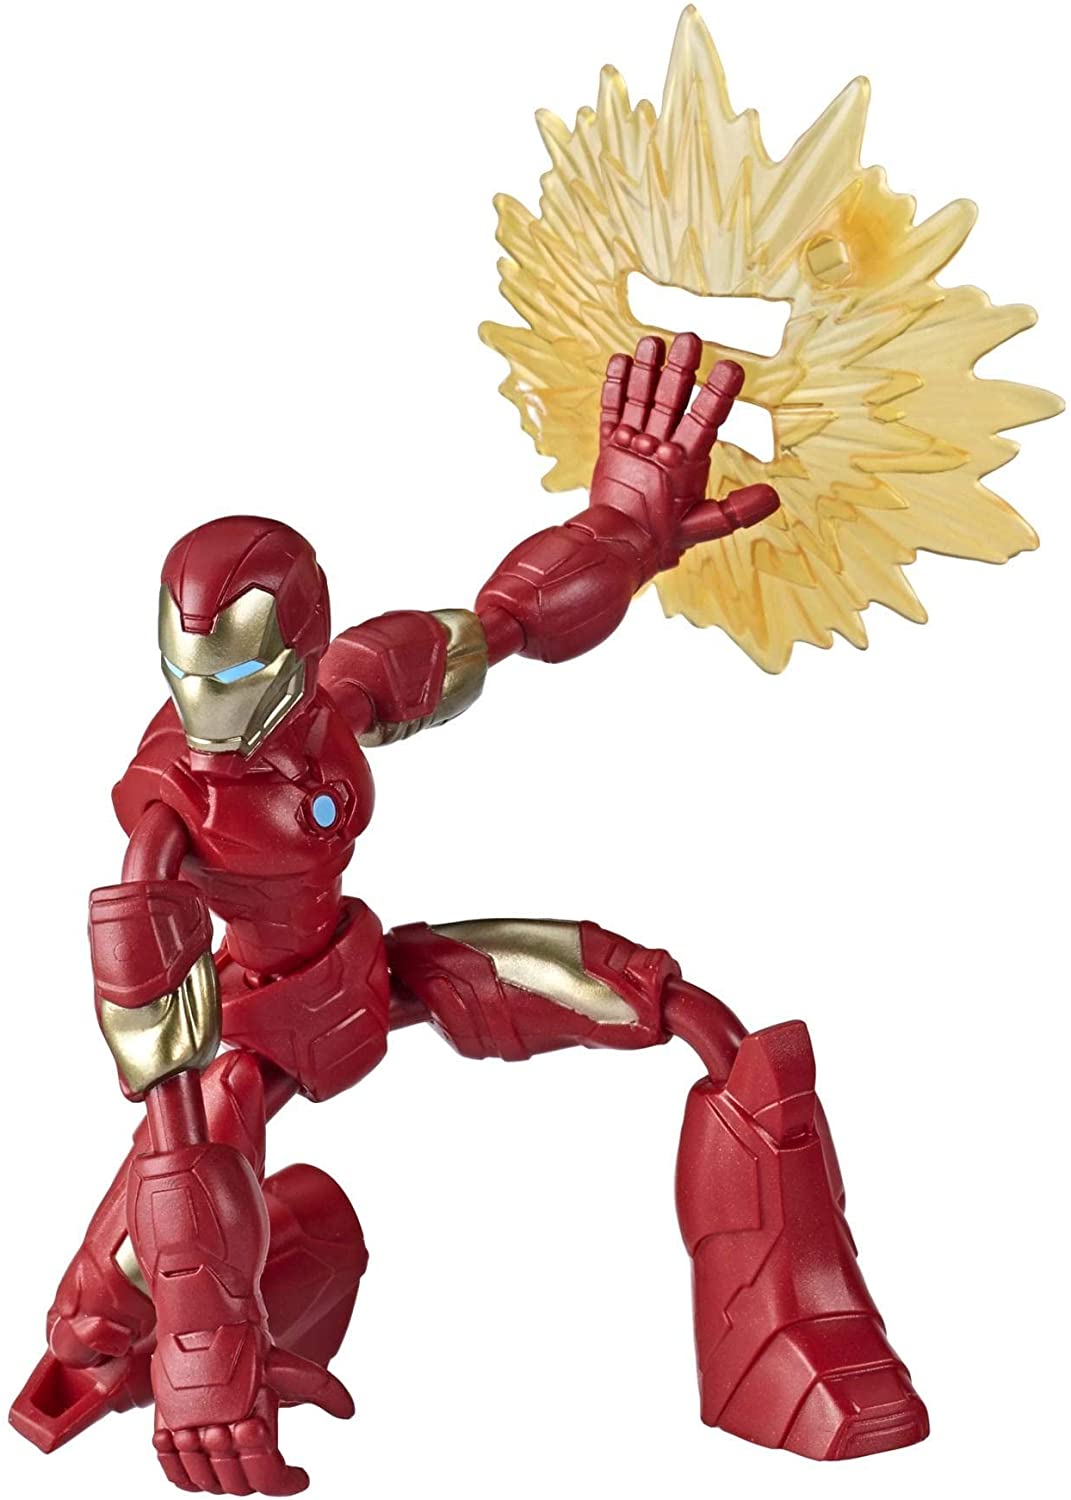 Marvel E7870 Avengers Bend and Flex Action Figura flexible de Iron Man de 6 pulgadas